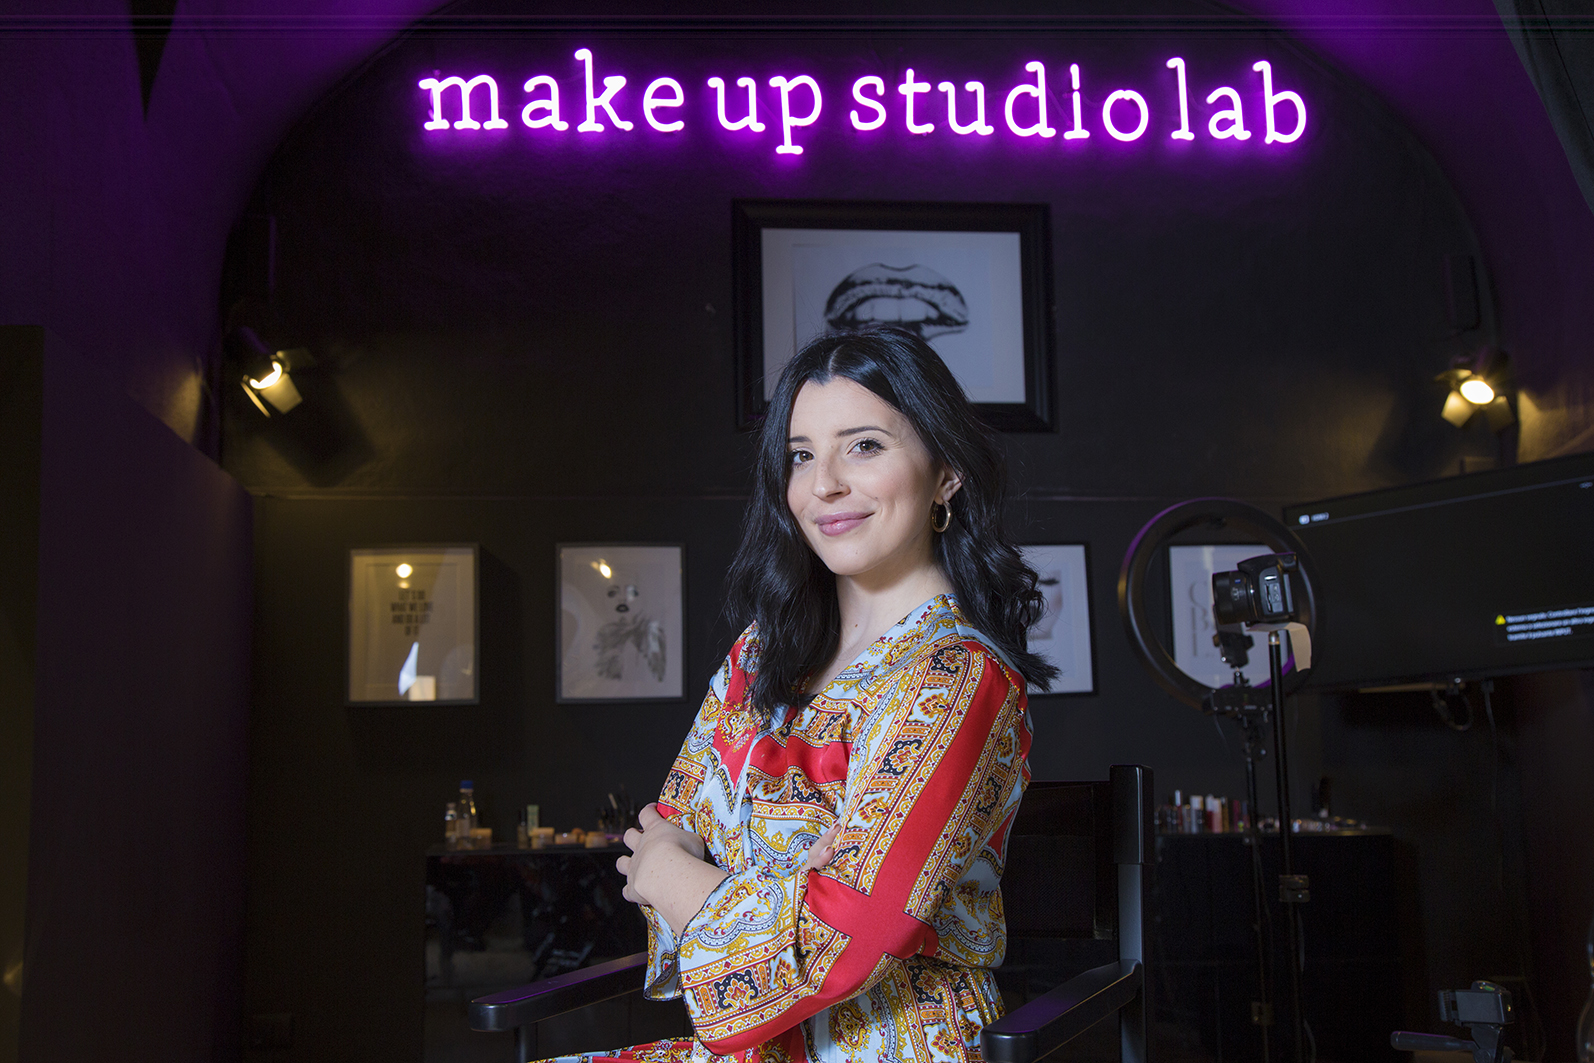 Makeup Studiolab: sfida all’ultimo pennello